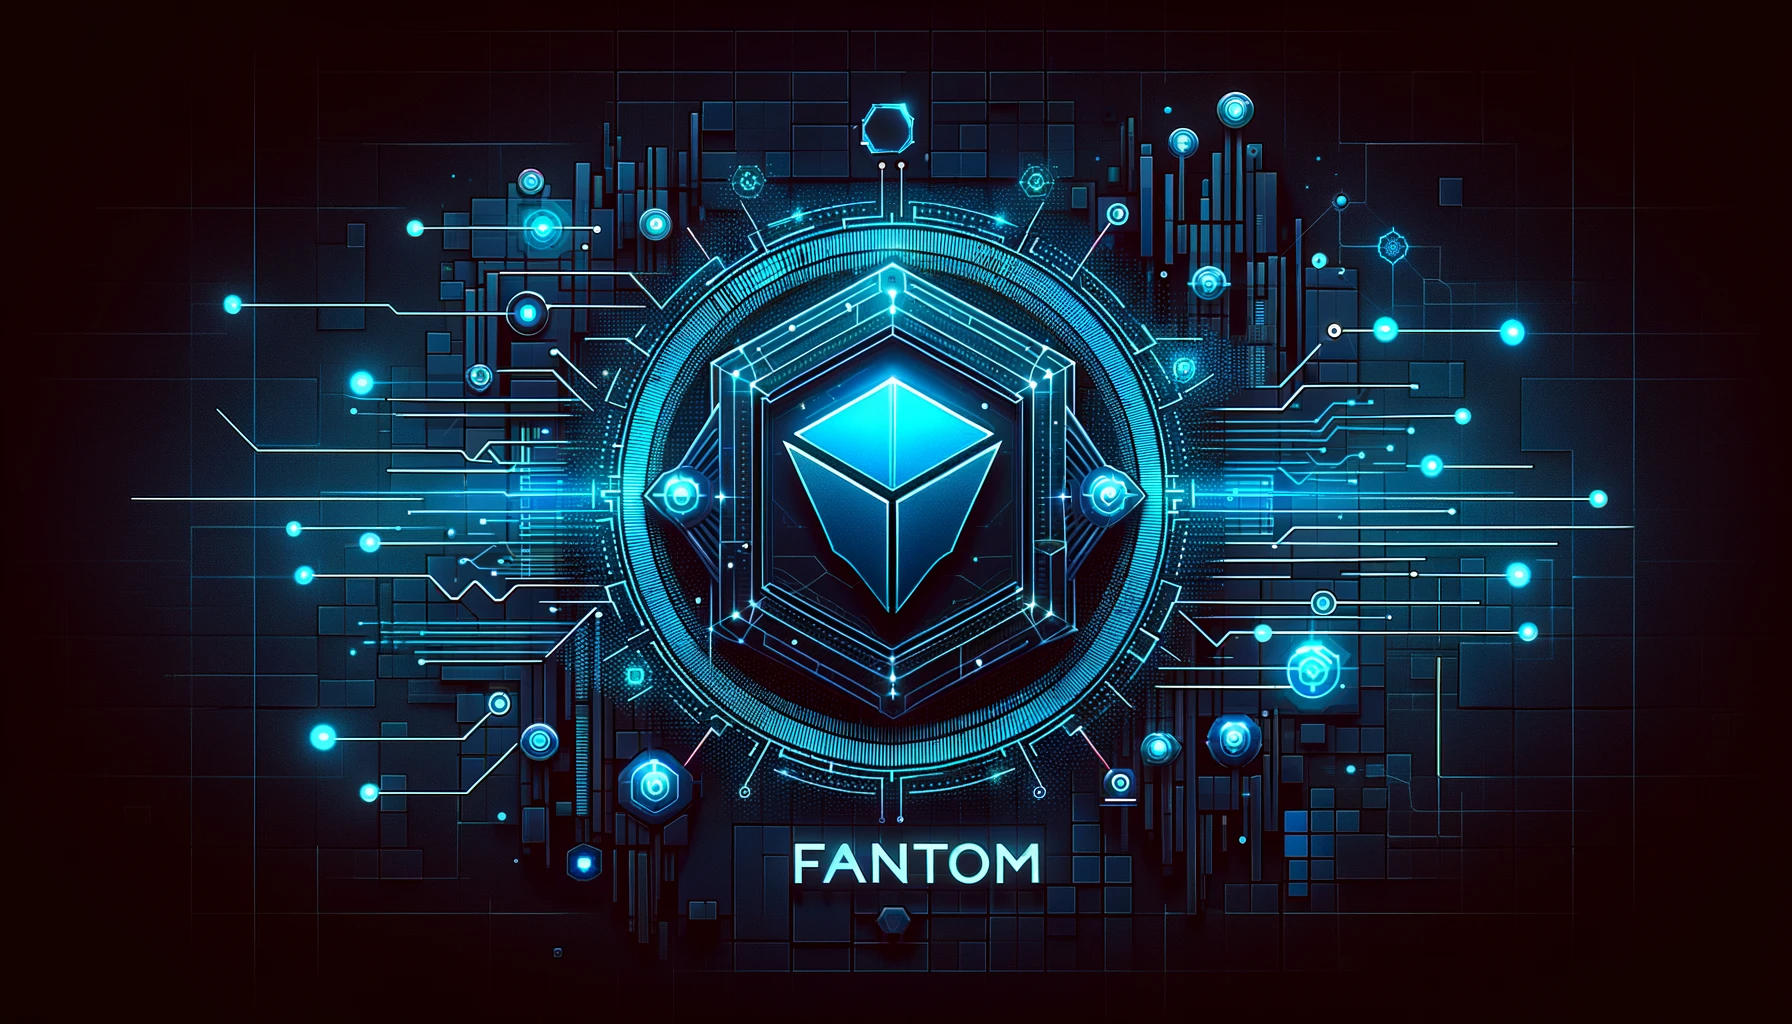 Fantom blockchain